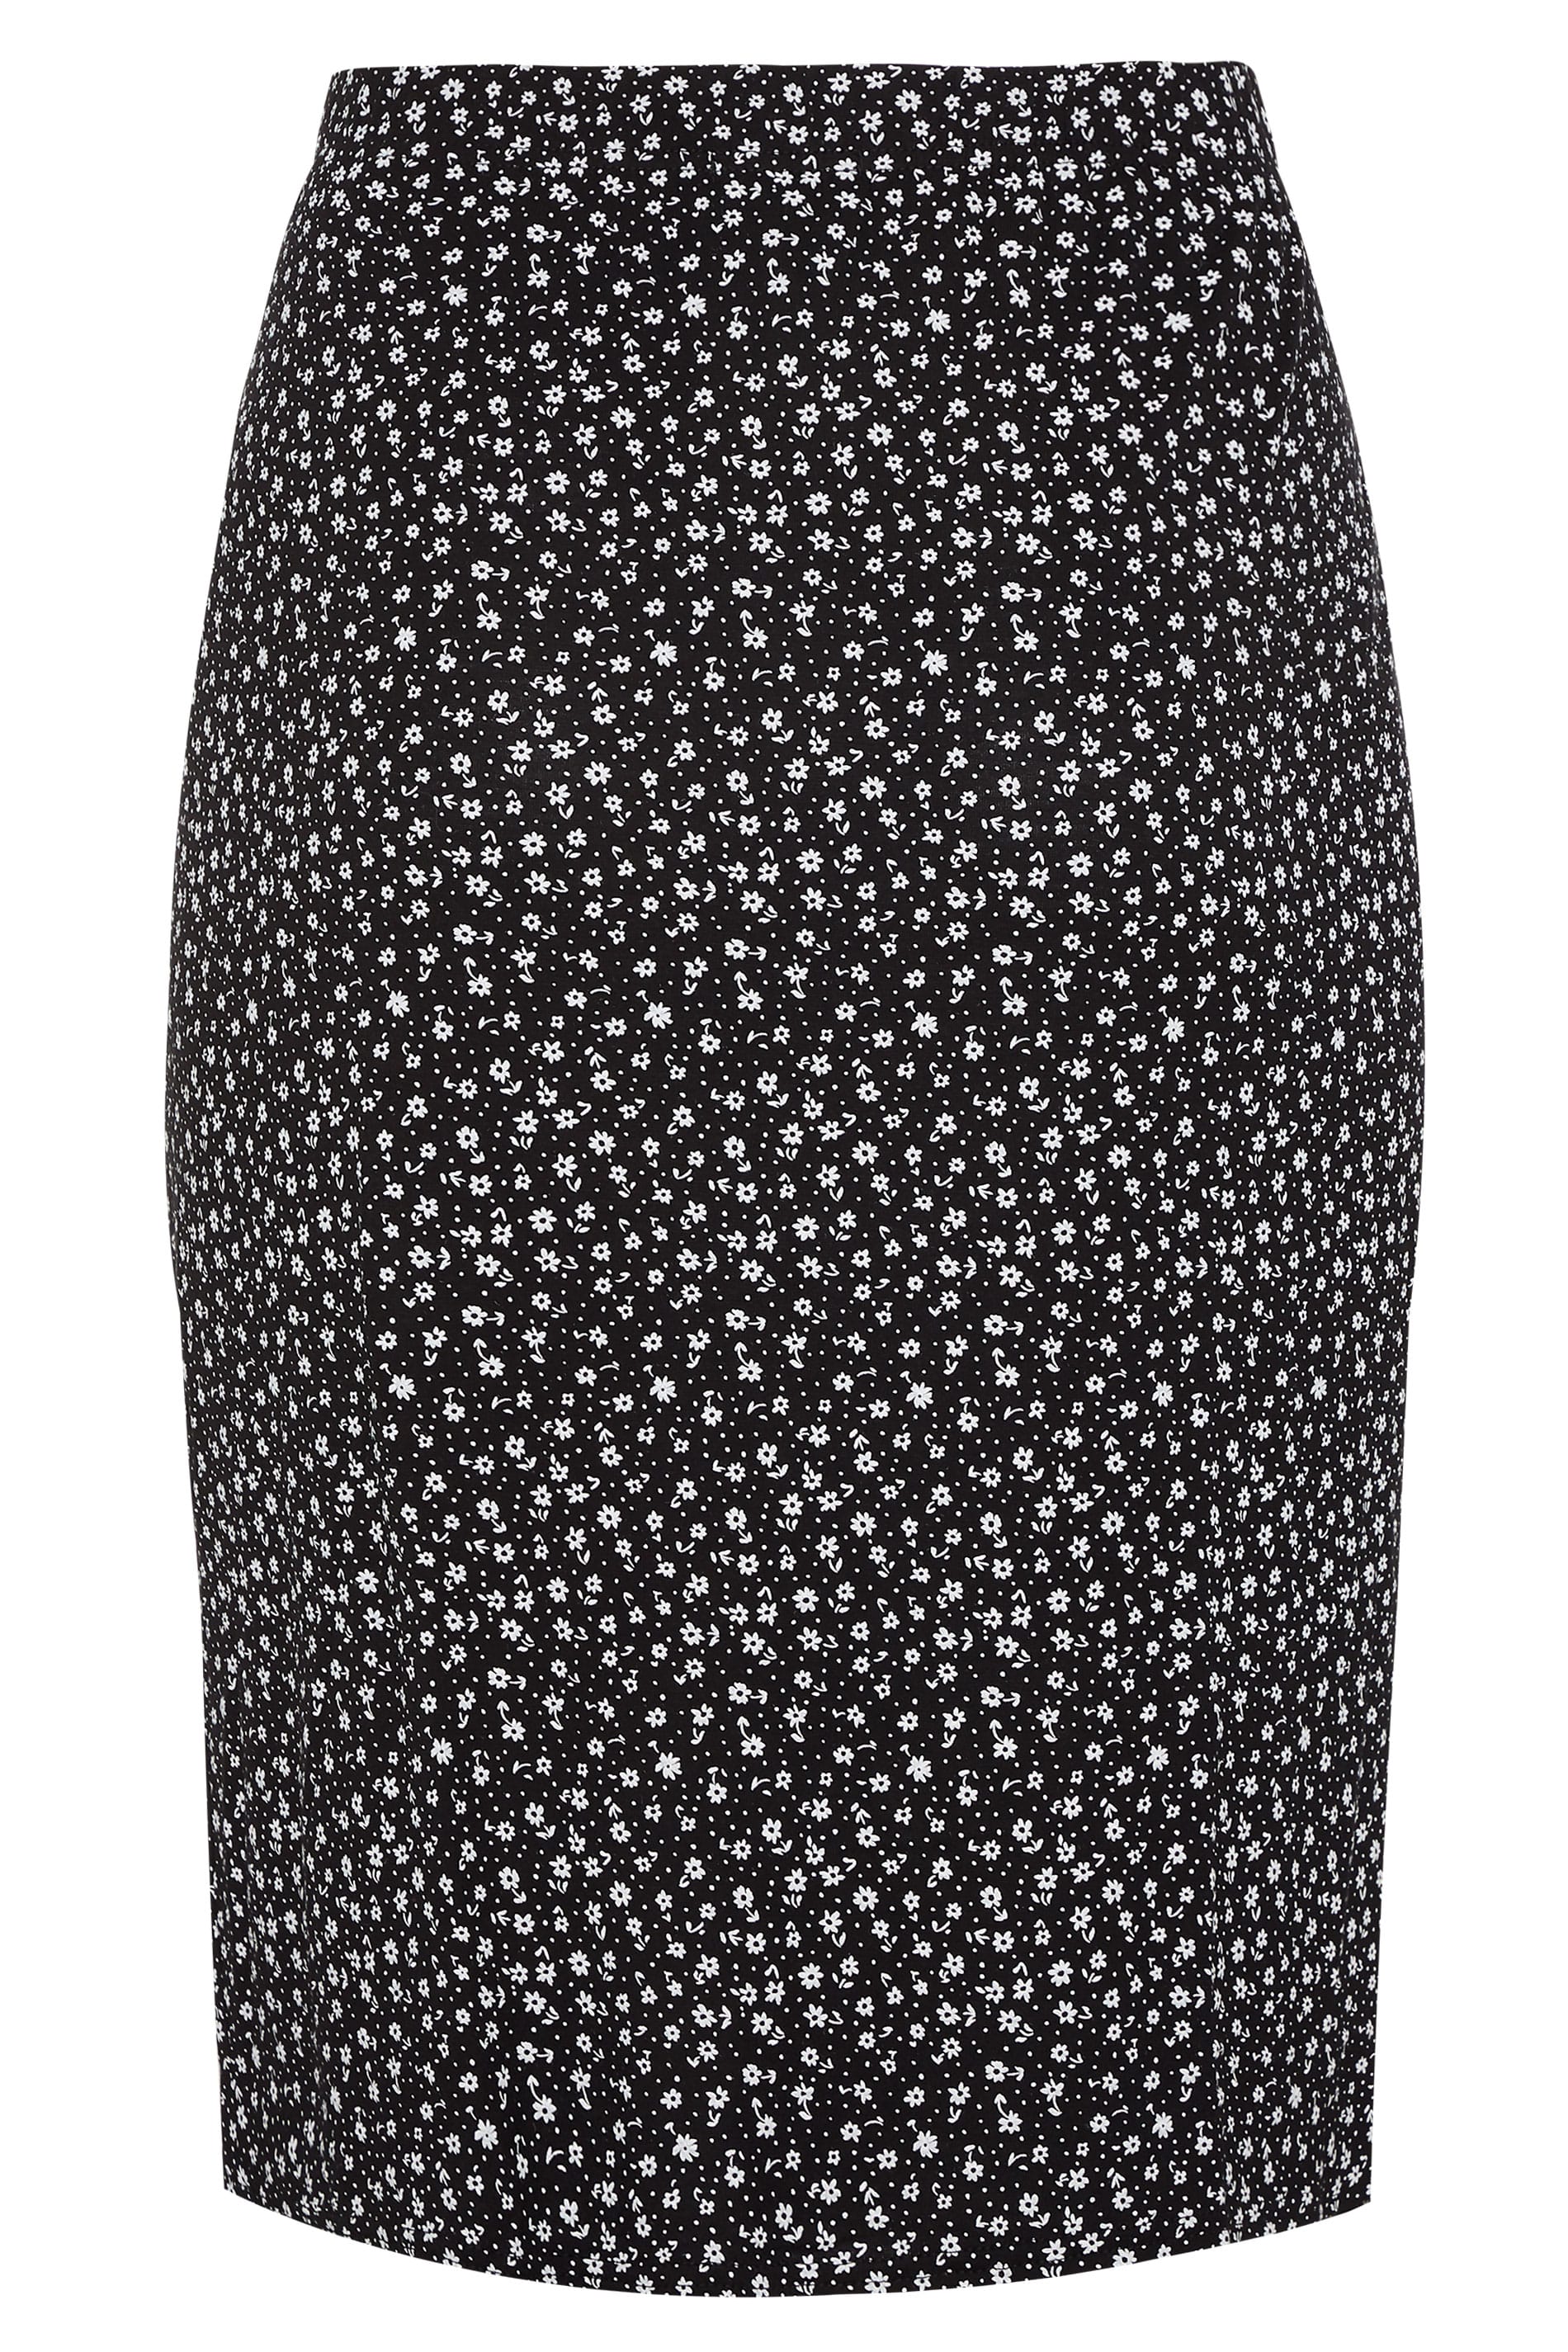 Black Ditsy Floral Spot Midi Tube Skirt | Yours Clothing